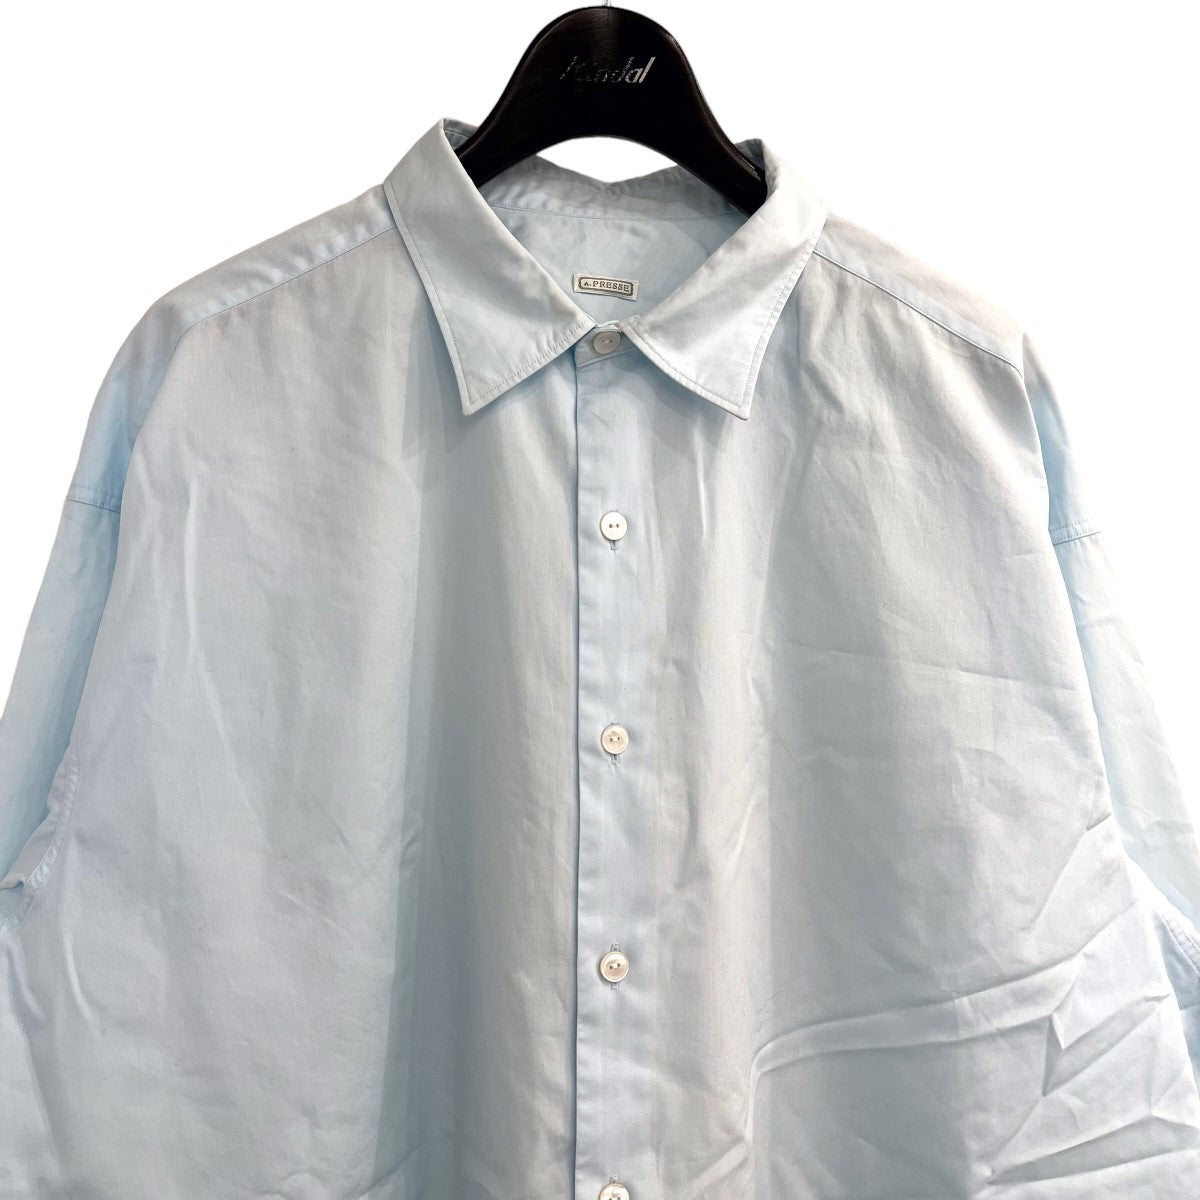 「Pullover Granpa Shirt」プルオーバー グランパシャツ22SAP 02 08AH